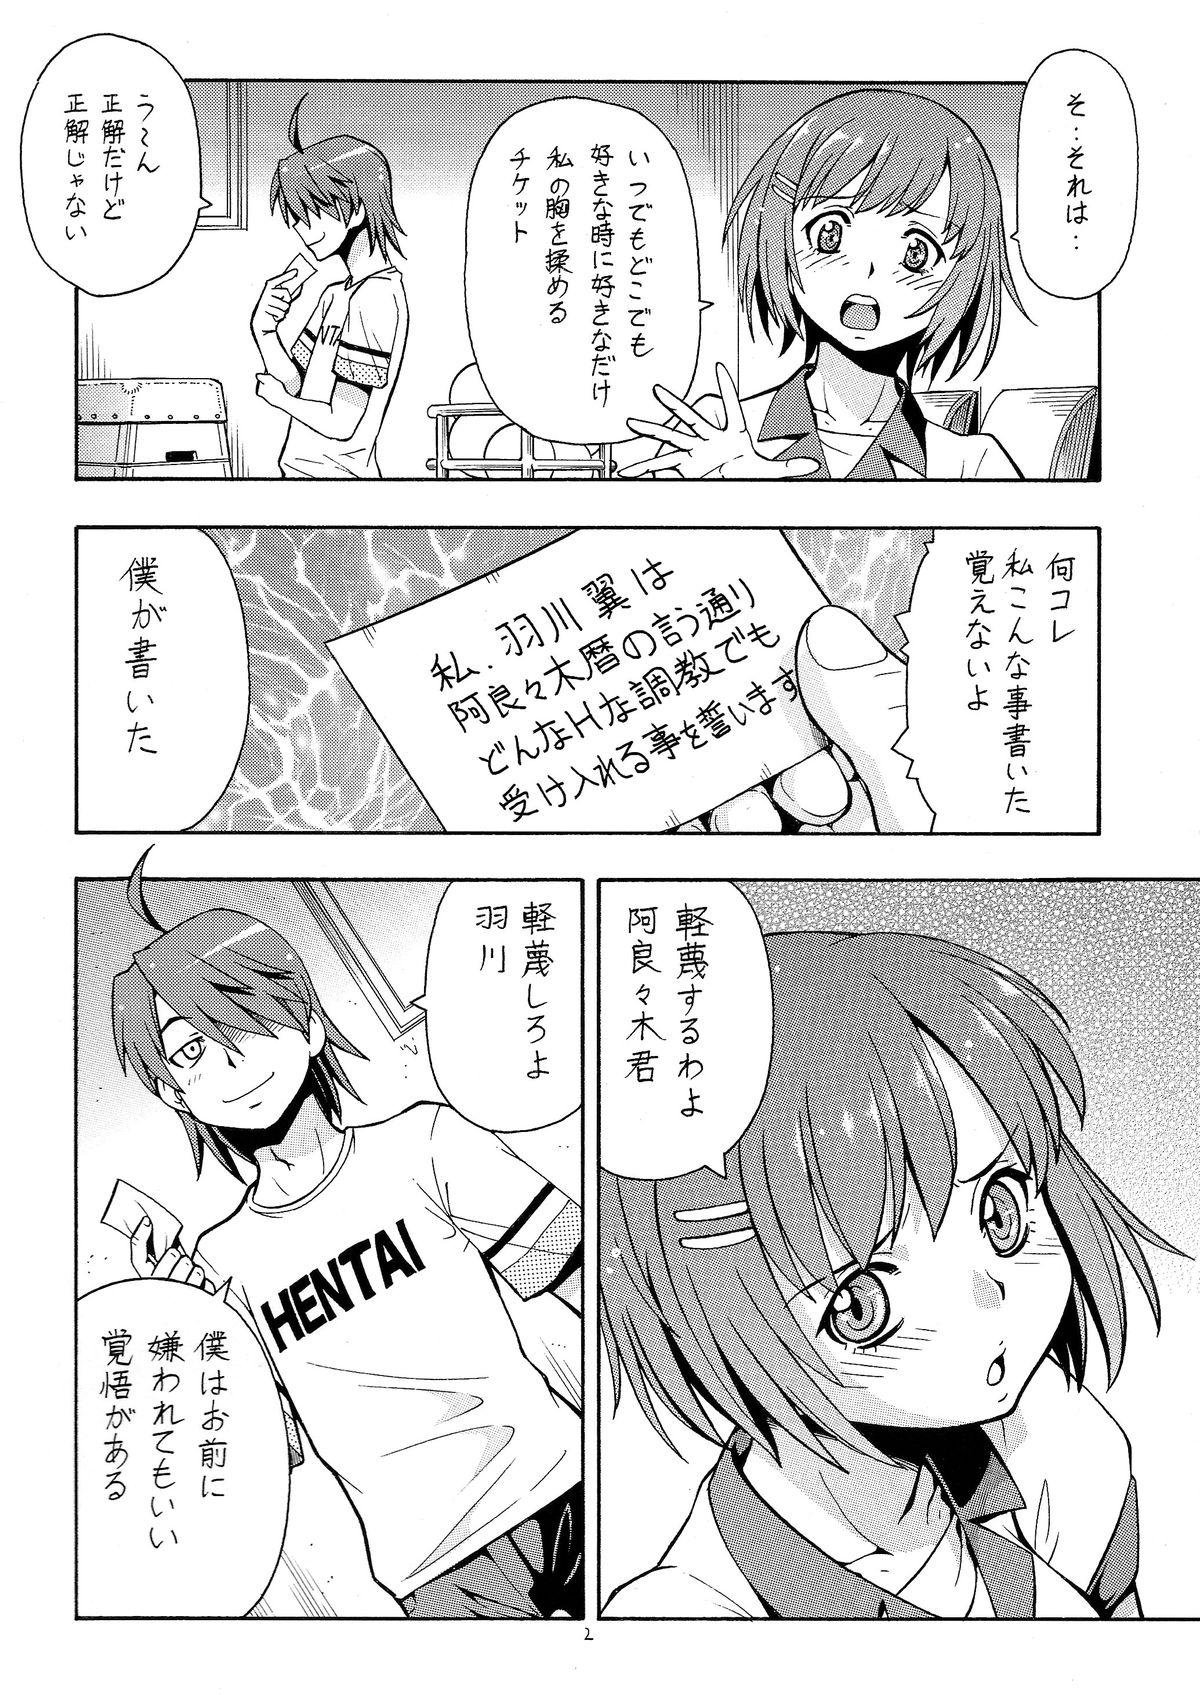 Verified Profile Hito ni Hakanai to Kaite "Araragi" to Yomu 7 - Bakemonogatari Internal - Page 4